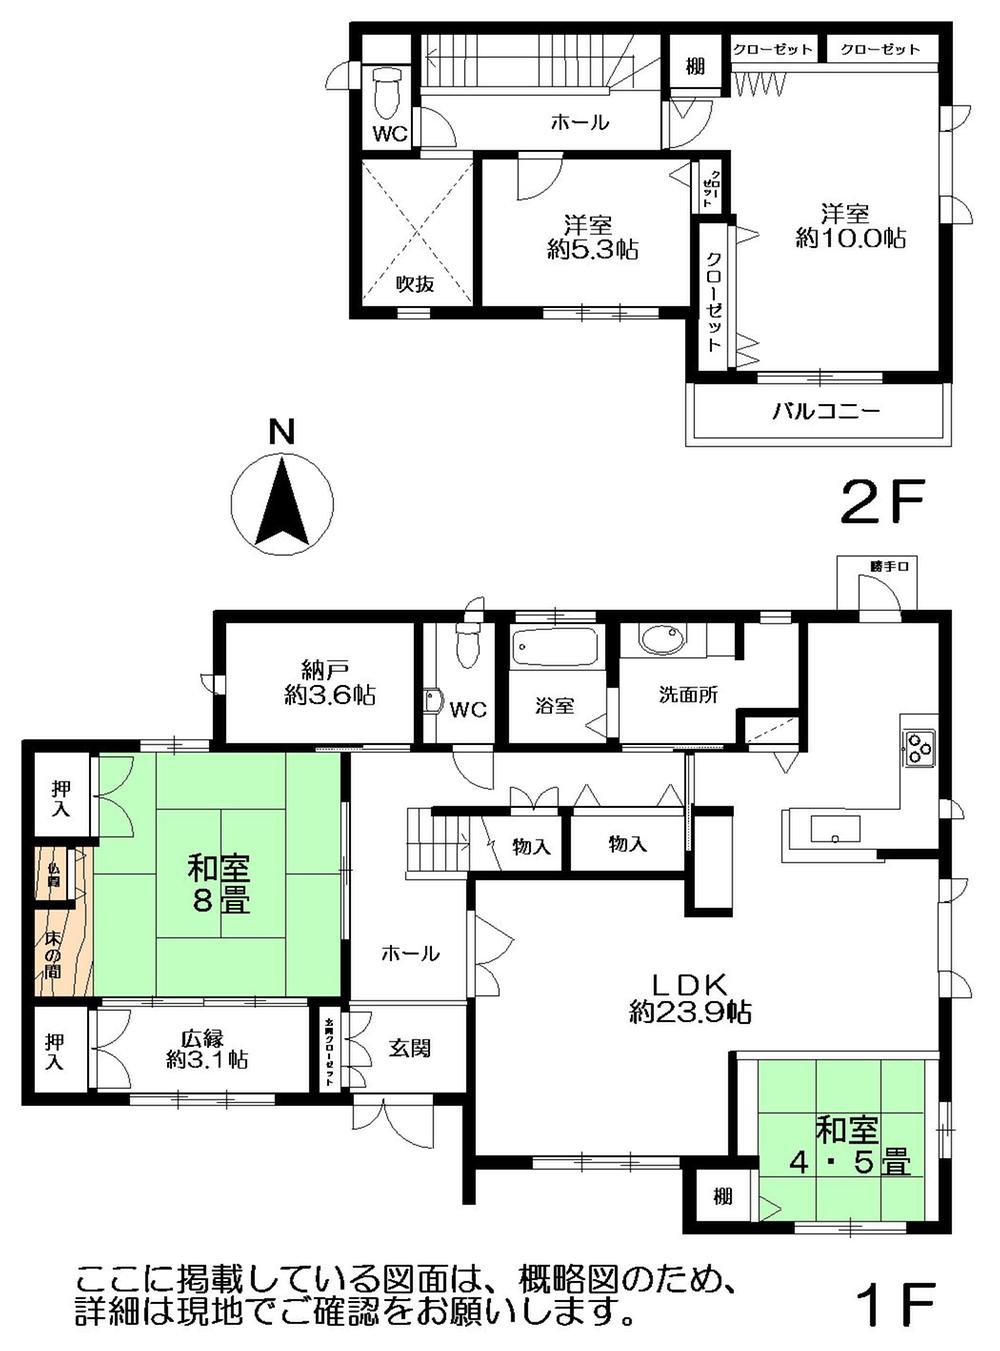 Floor plan. 28.8 million yen, 4LDK + S (storeroom), Land area 333.3 sq m , Building area 158.34 sq m